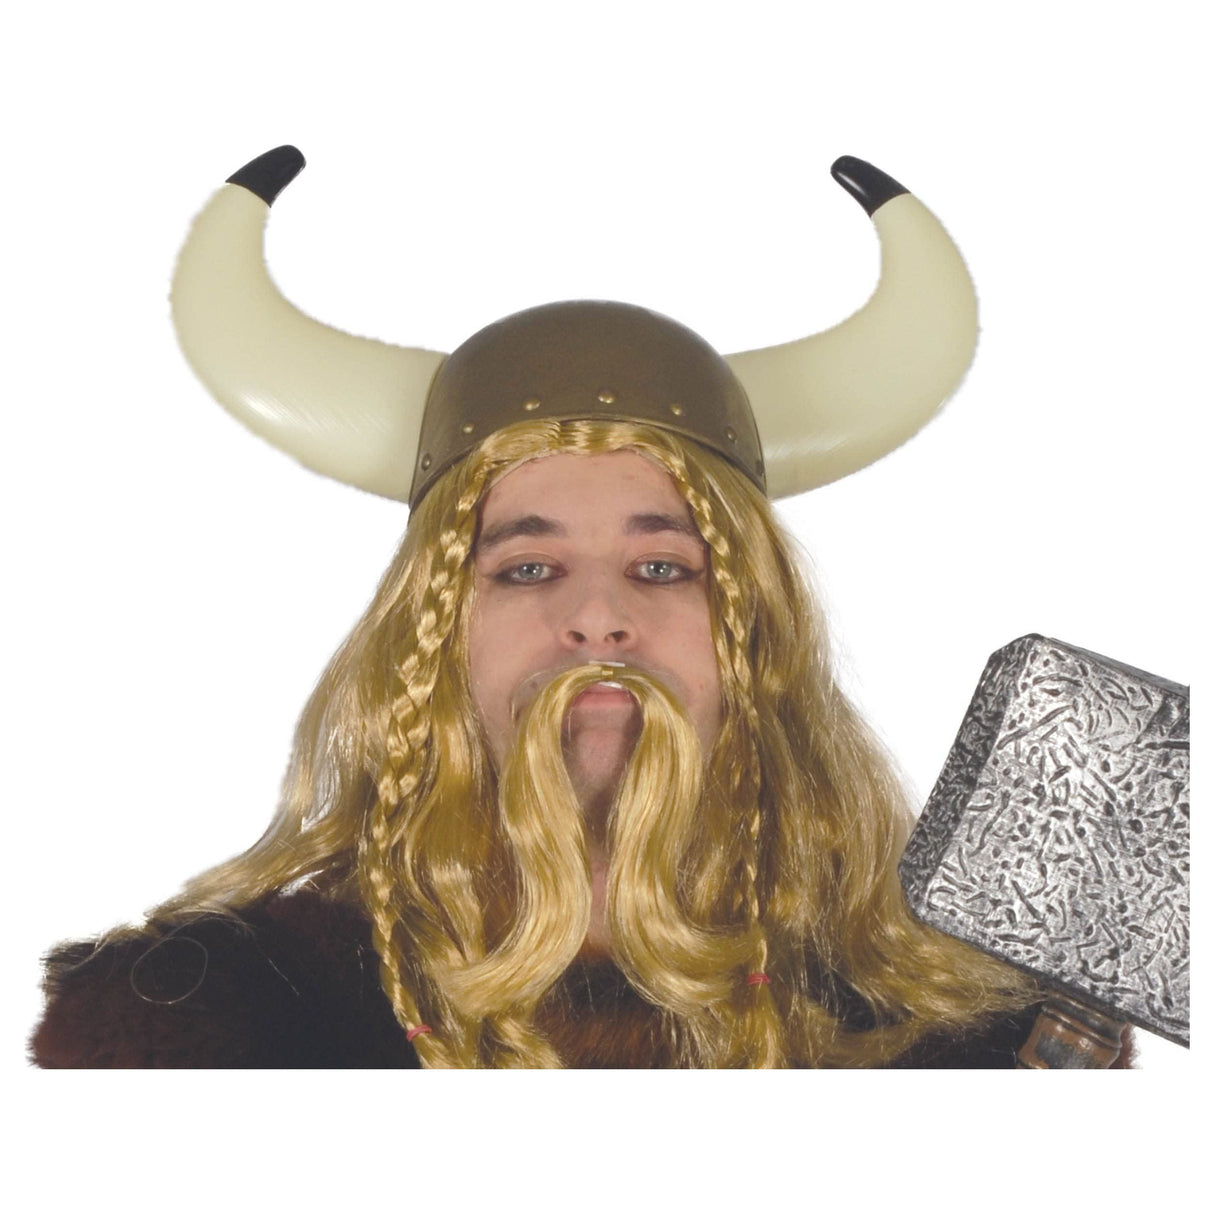 Nordic Viking helmet with horns